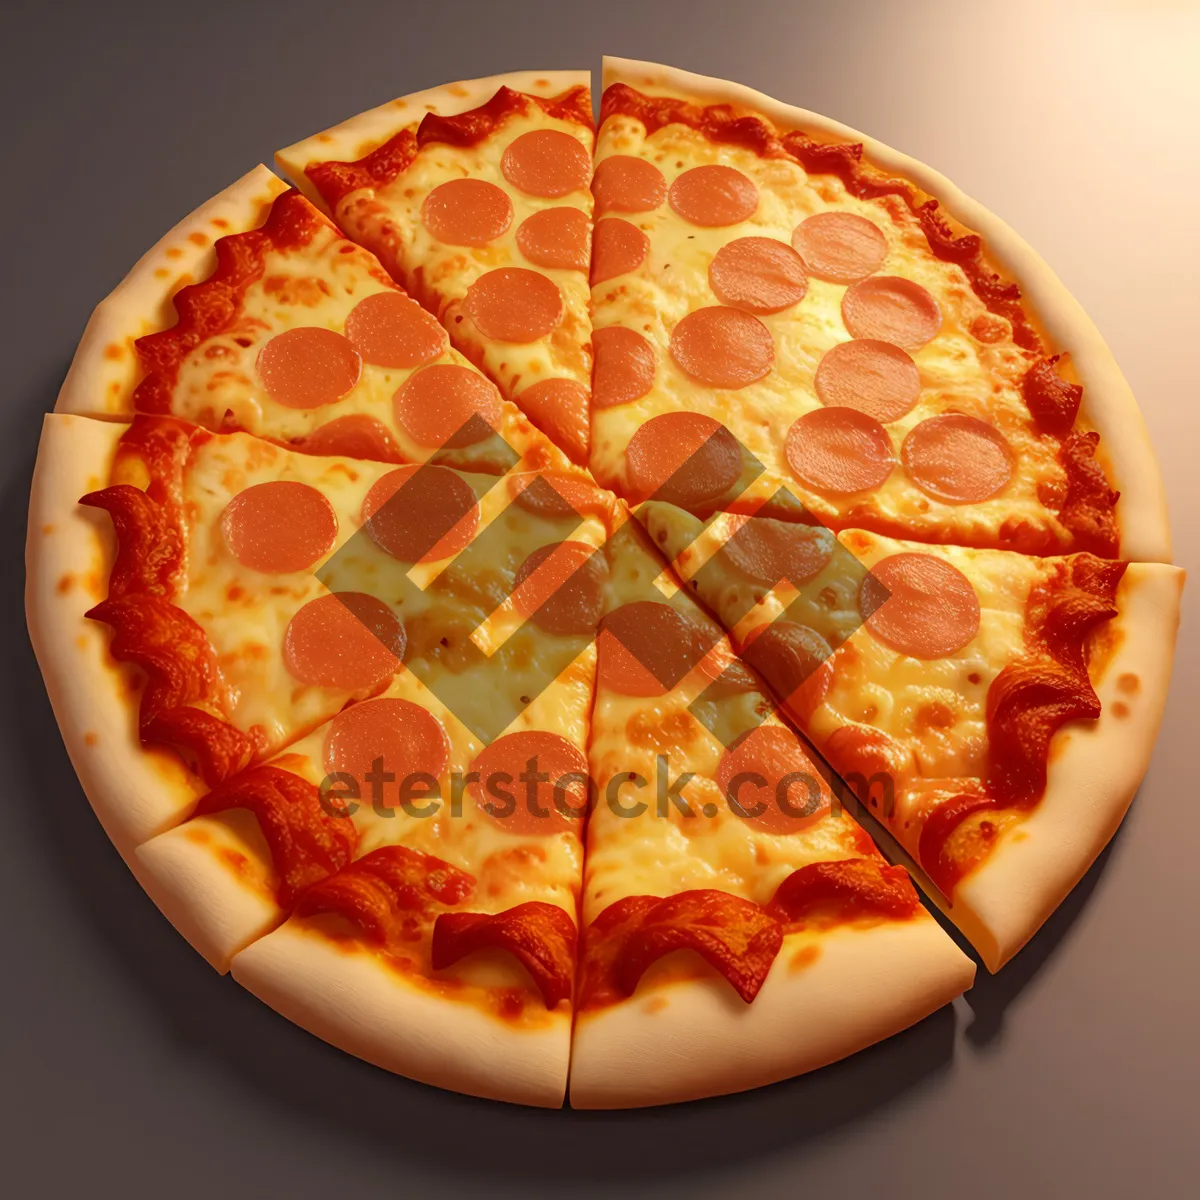 Picture of Delicious Pizza with Mozzarella and Pepperoni